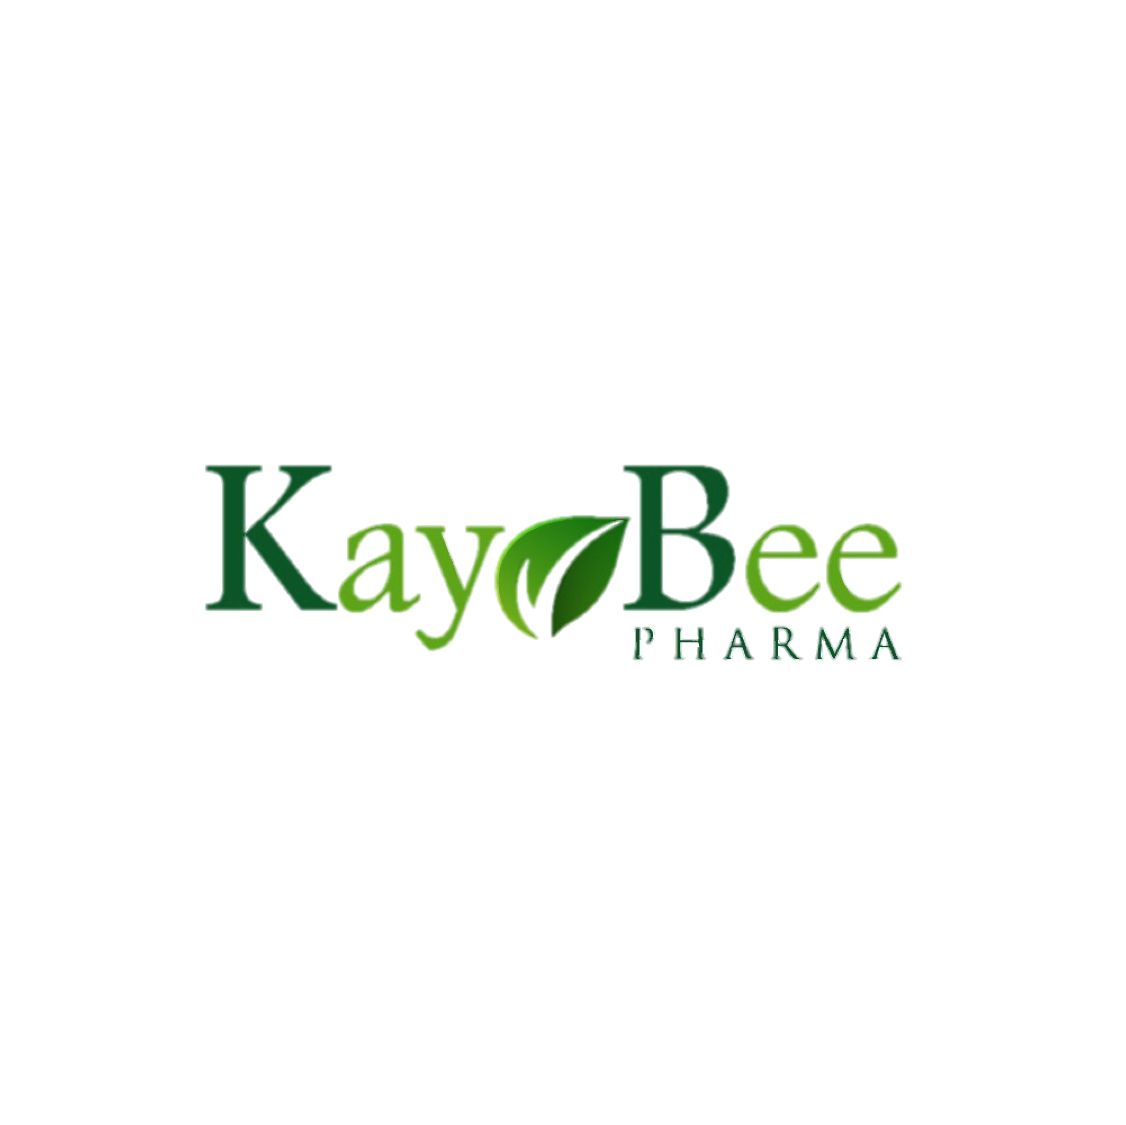 Kaybee pharma